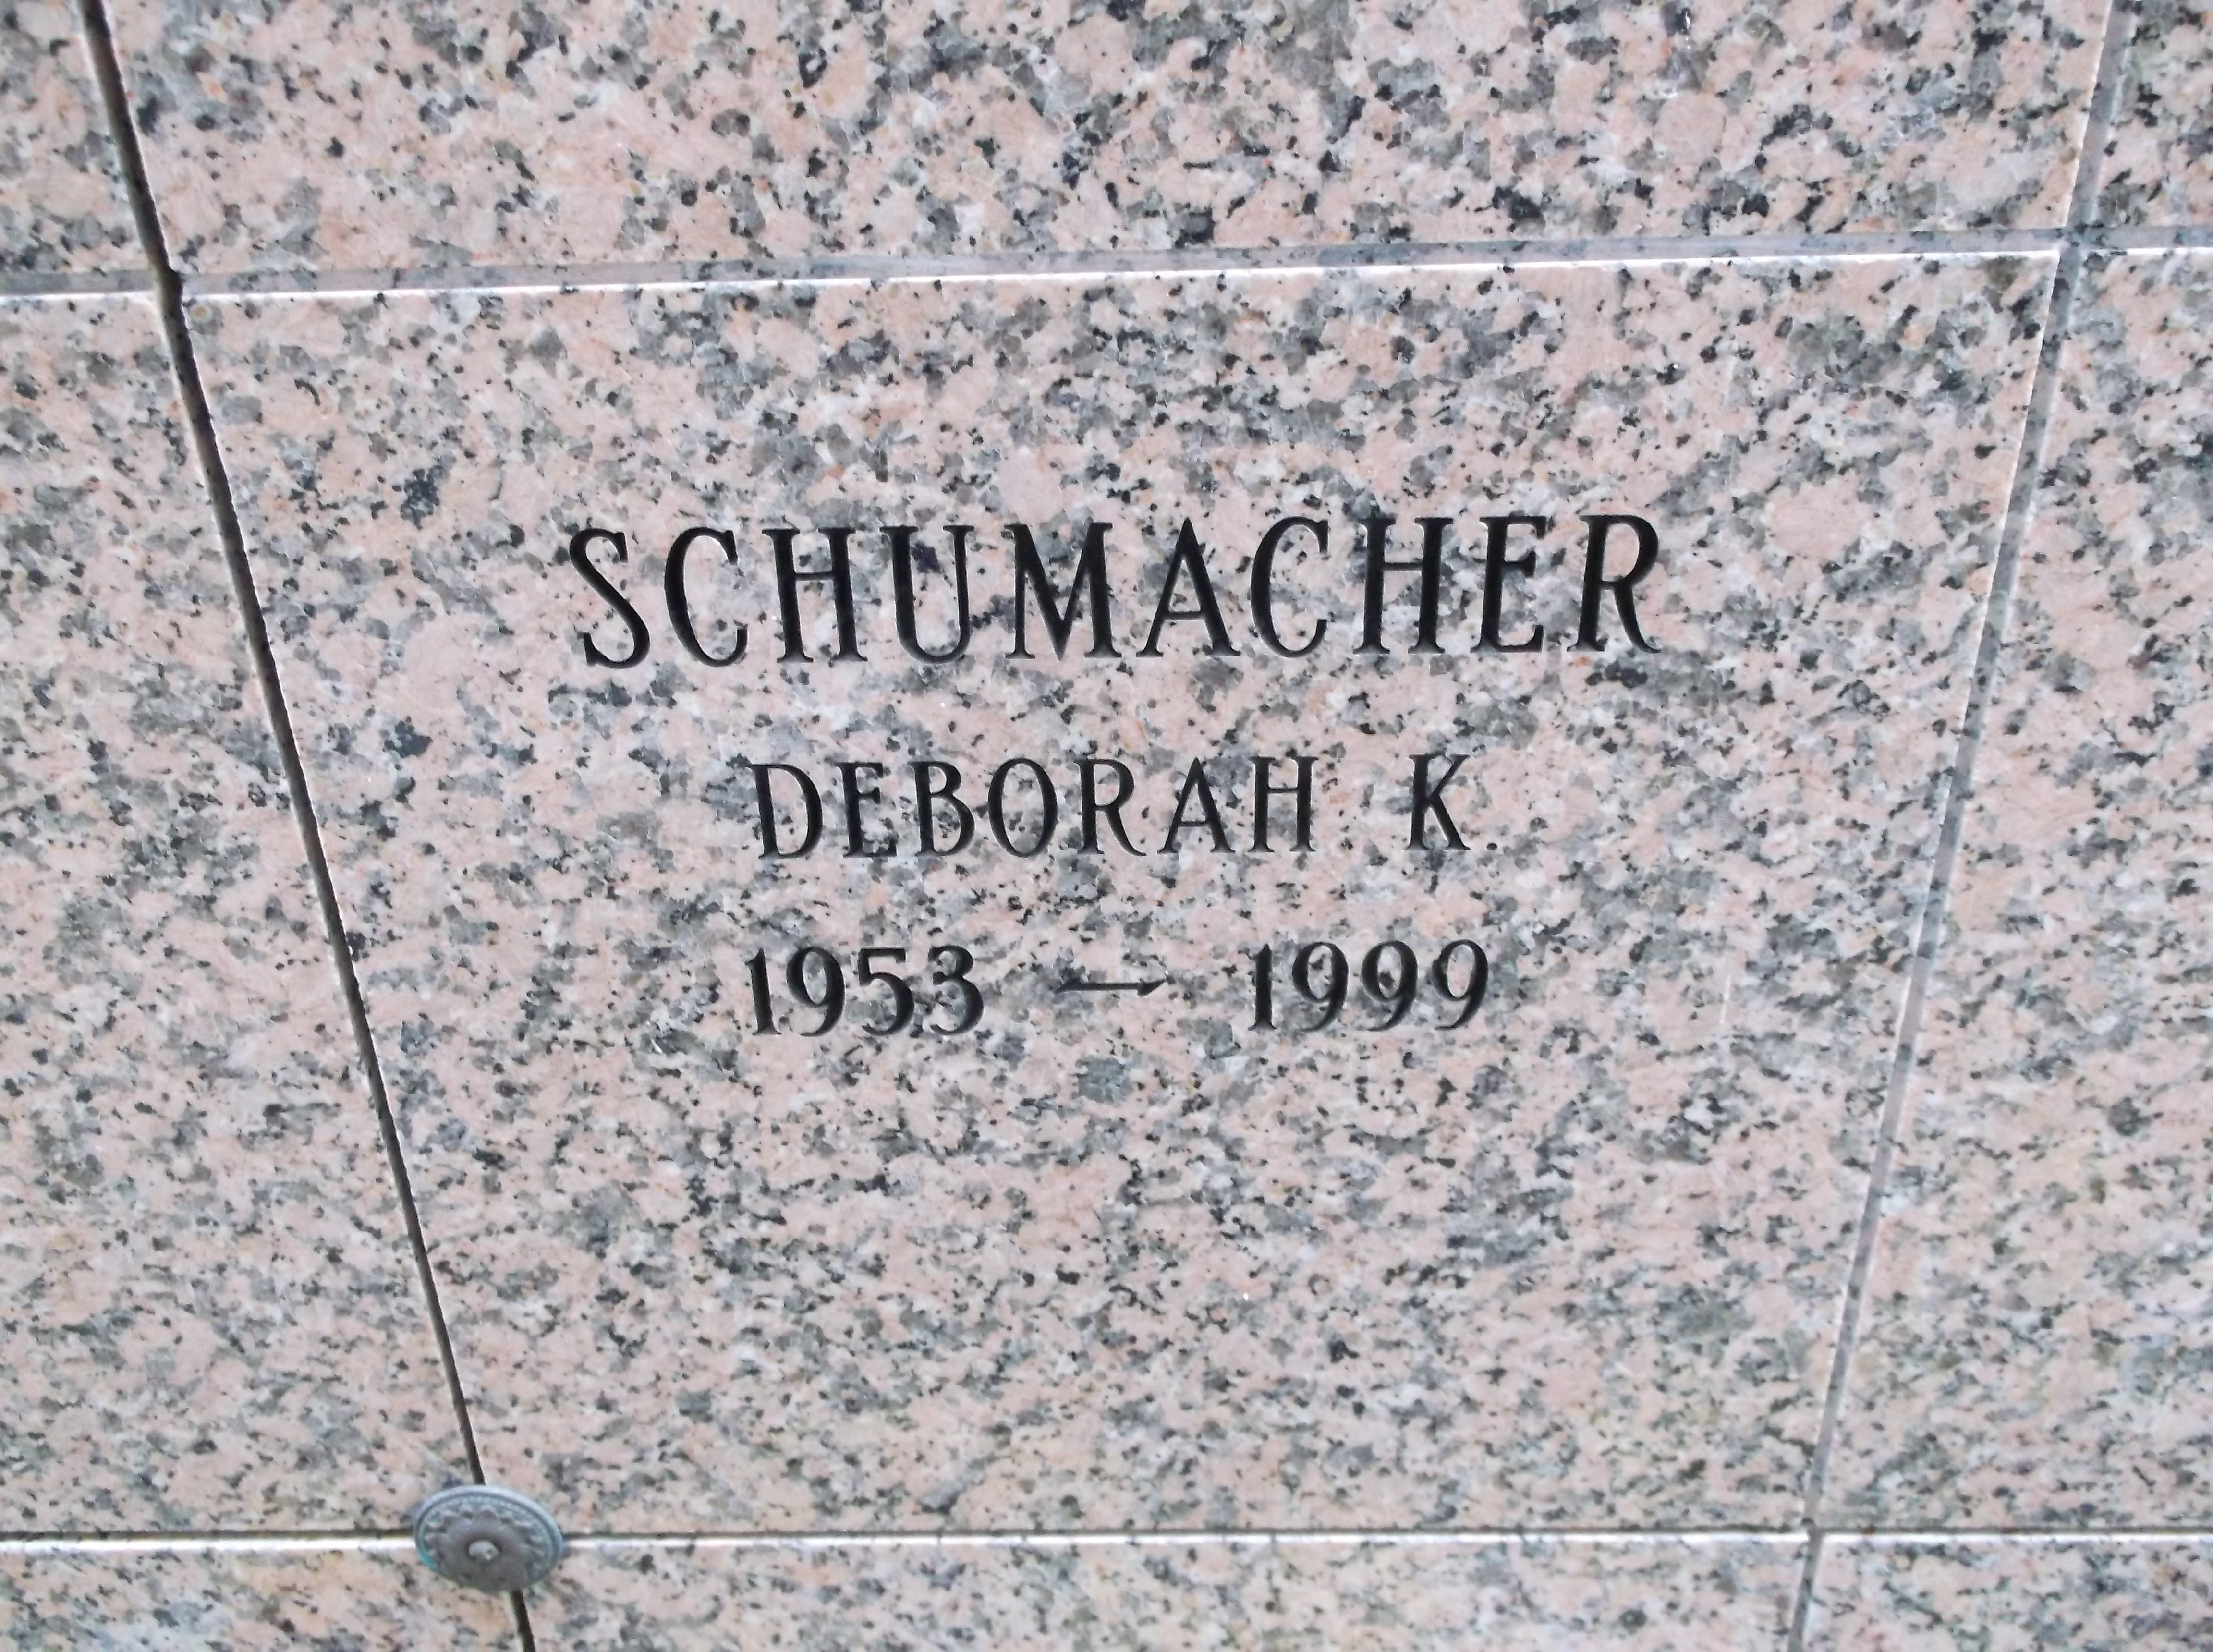 Deborah K Schumacher